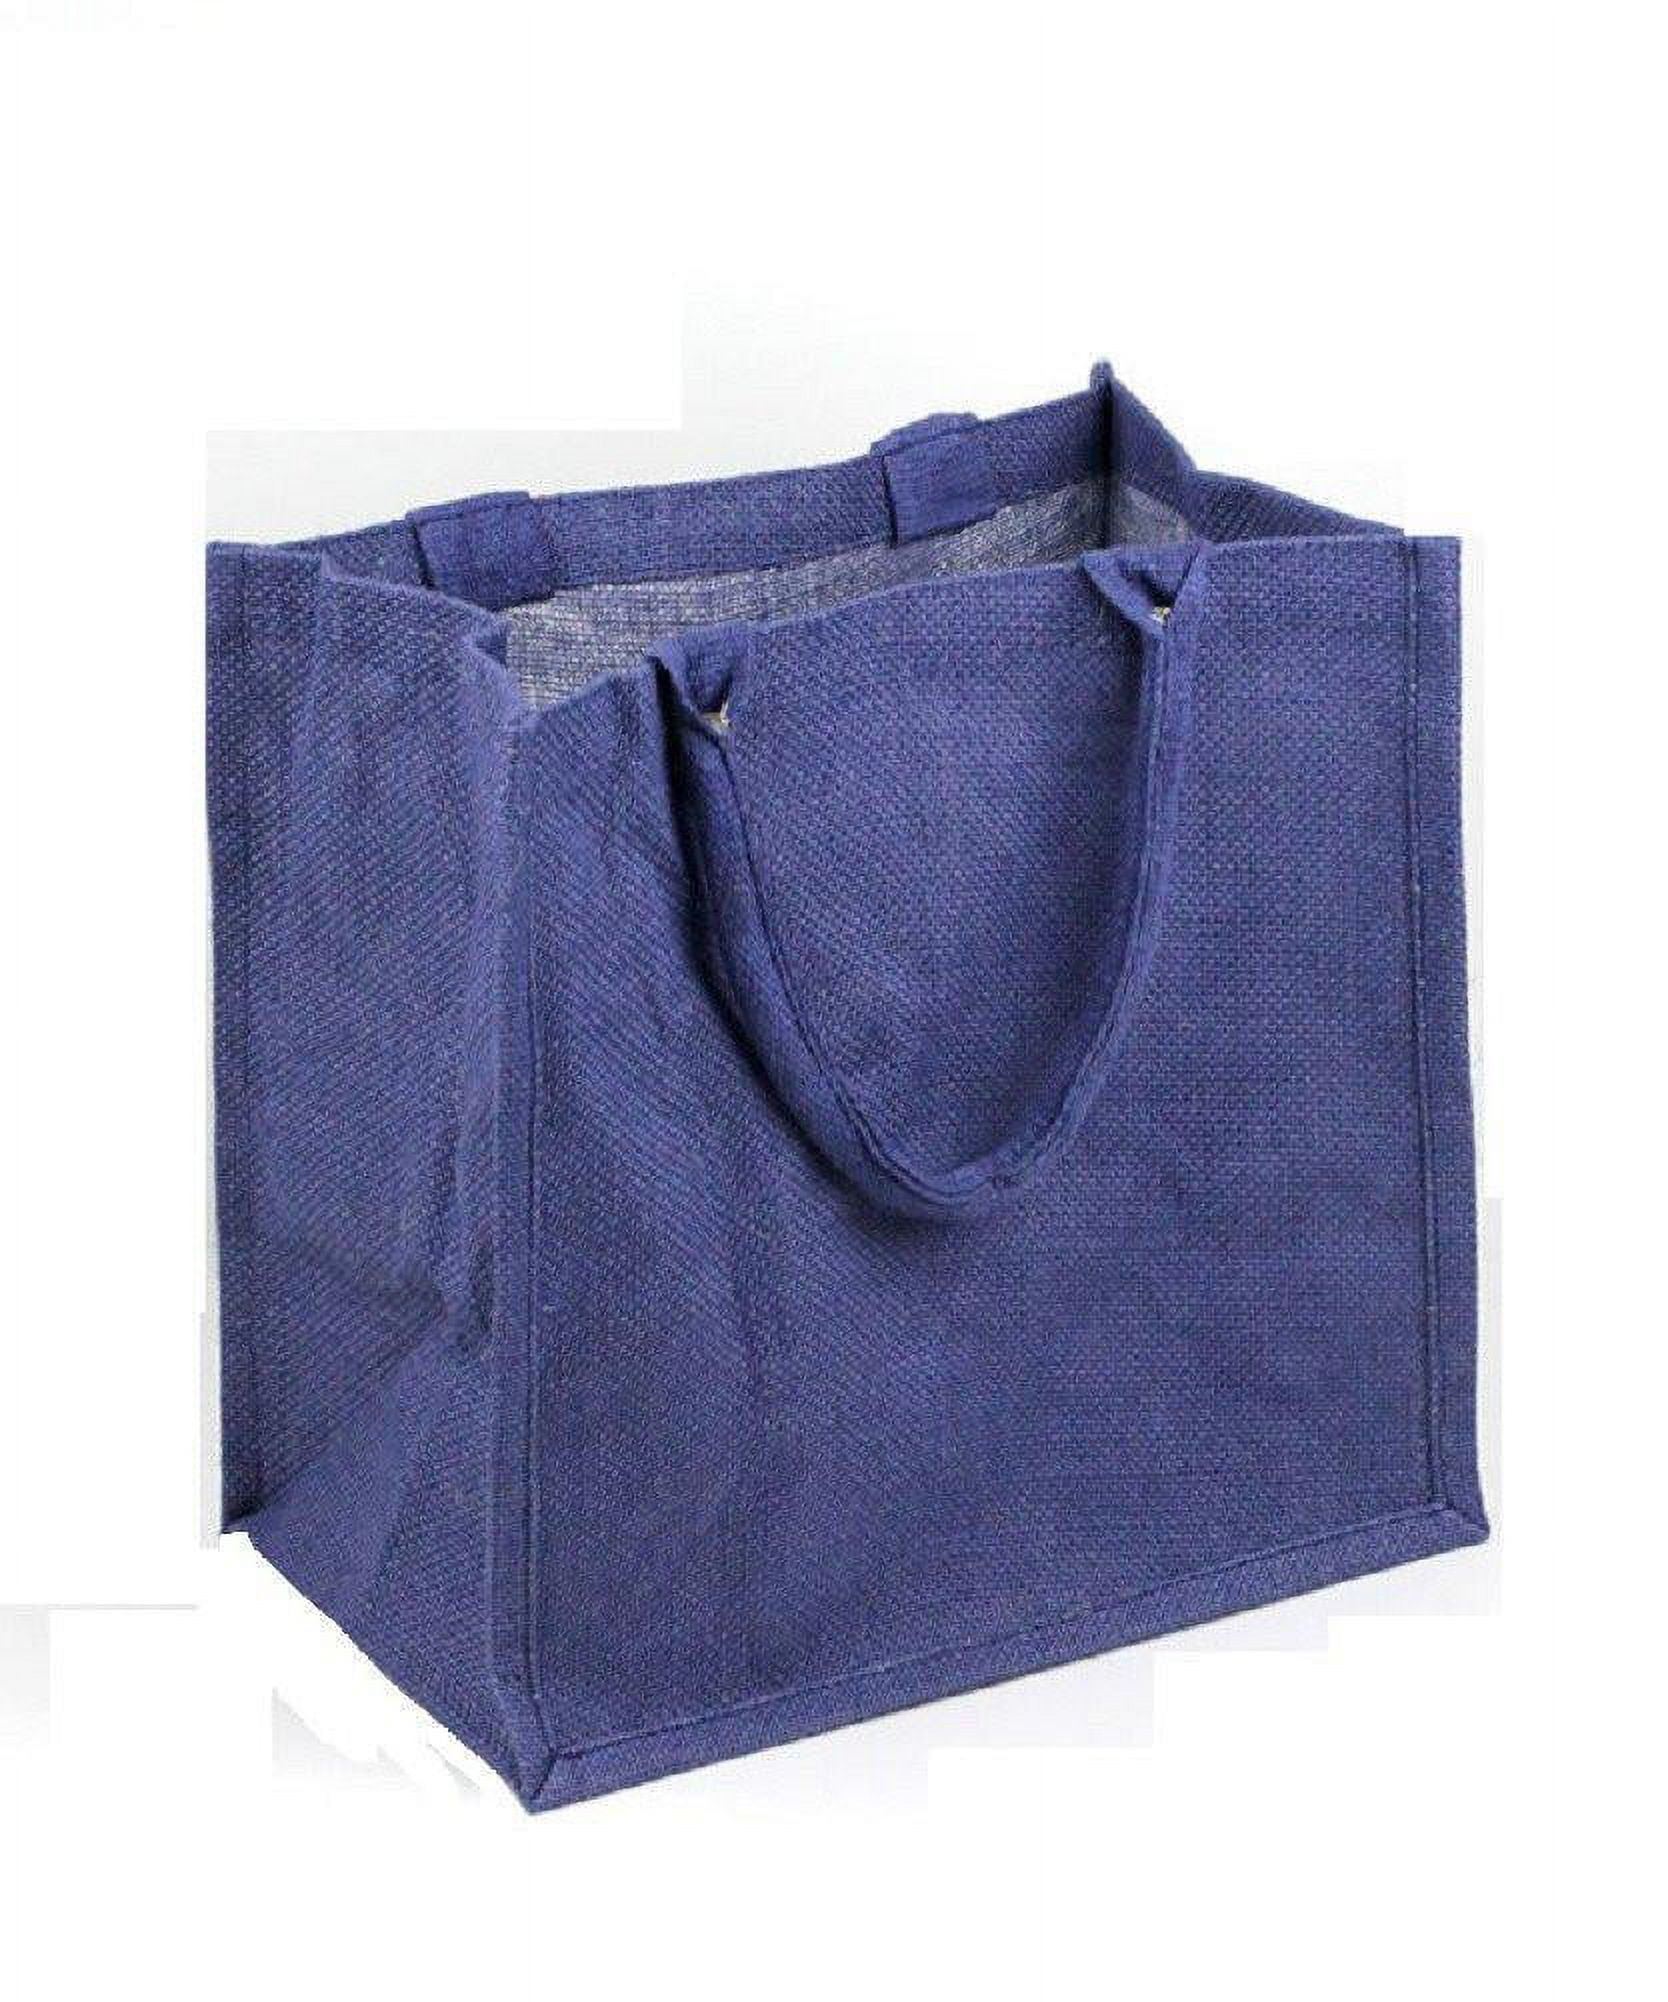 Amazon.com: 12 Pack Wholesale Burlap Bags - Basic Bulk Jute Burlap Bags -  Jute Tote Bags for Wedding Beach Bags, Jute Bags for Grocery Shopping and  More!: Home & Kitchen